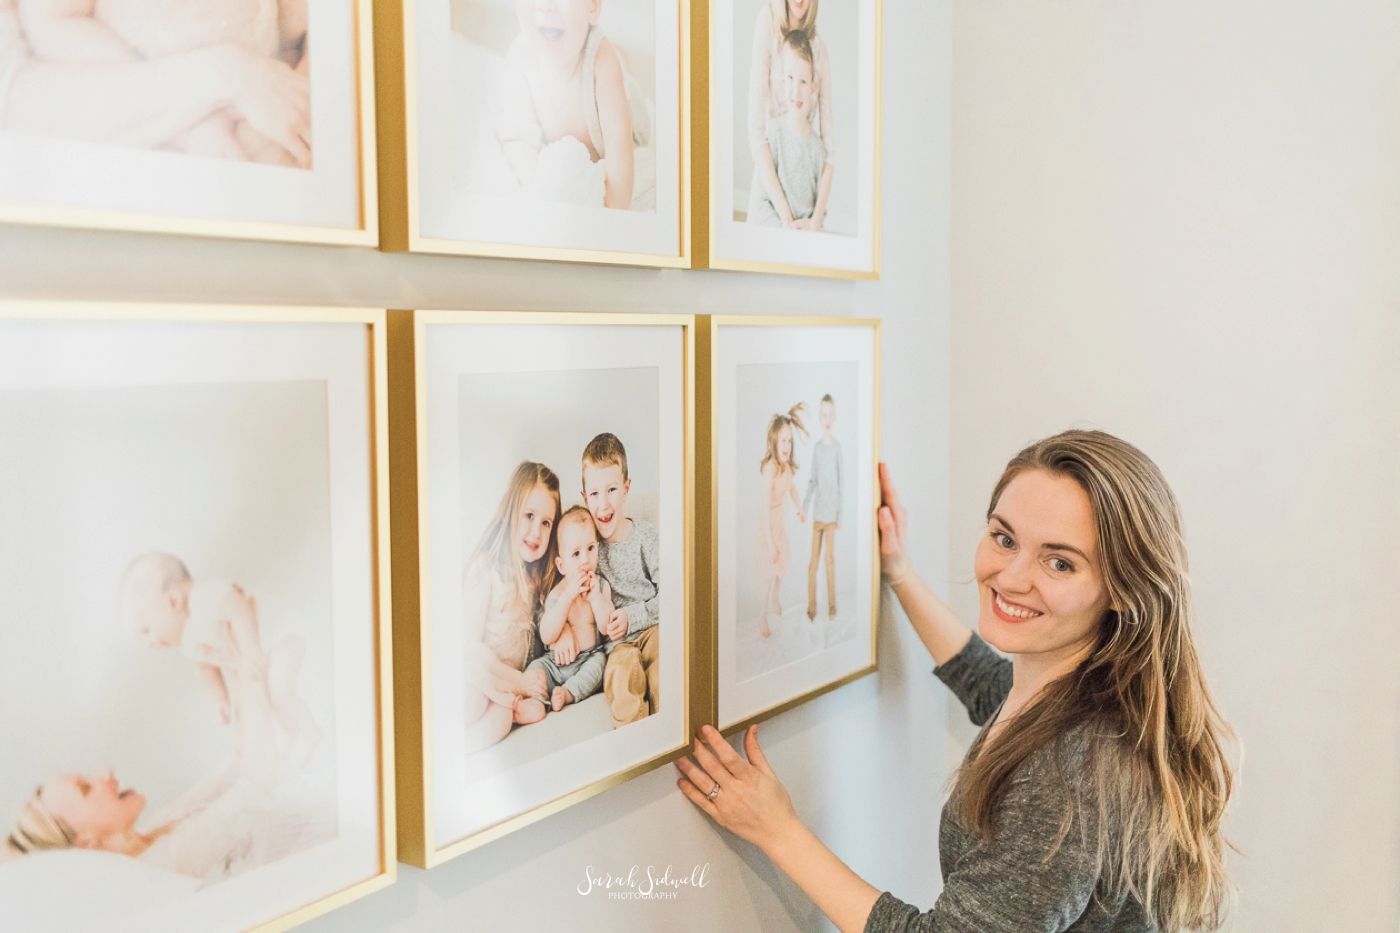 Family Photo Gallery Wall | Use photos as stylish home decor